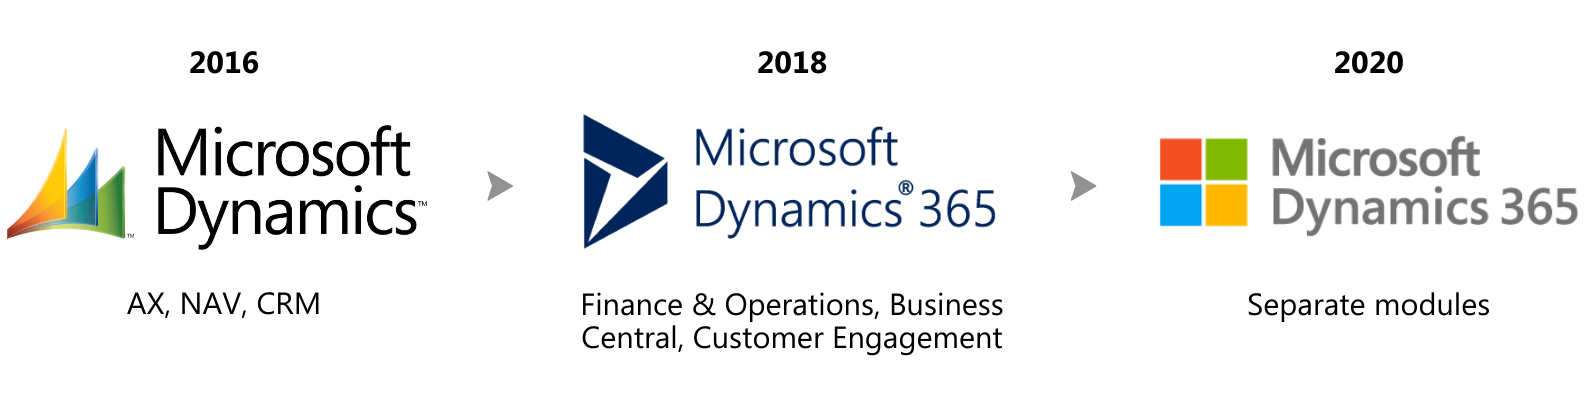 Microsoft Dynamics History